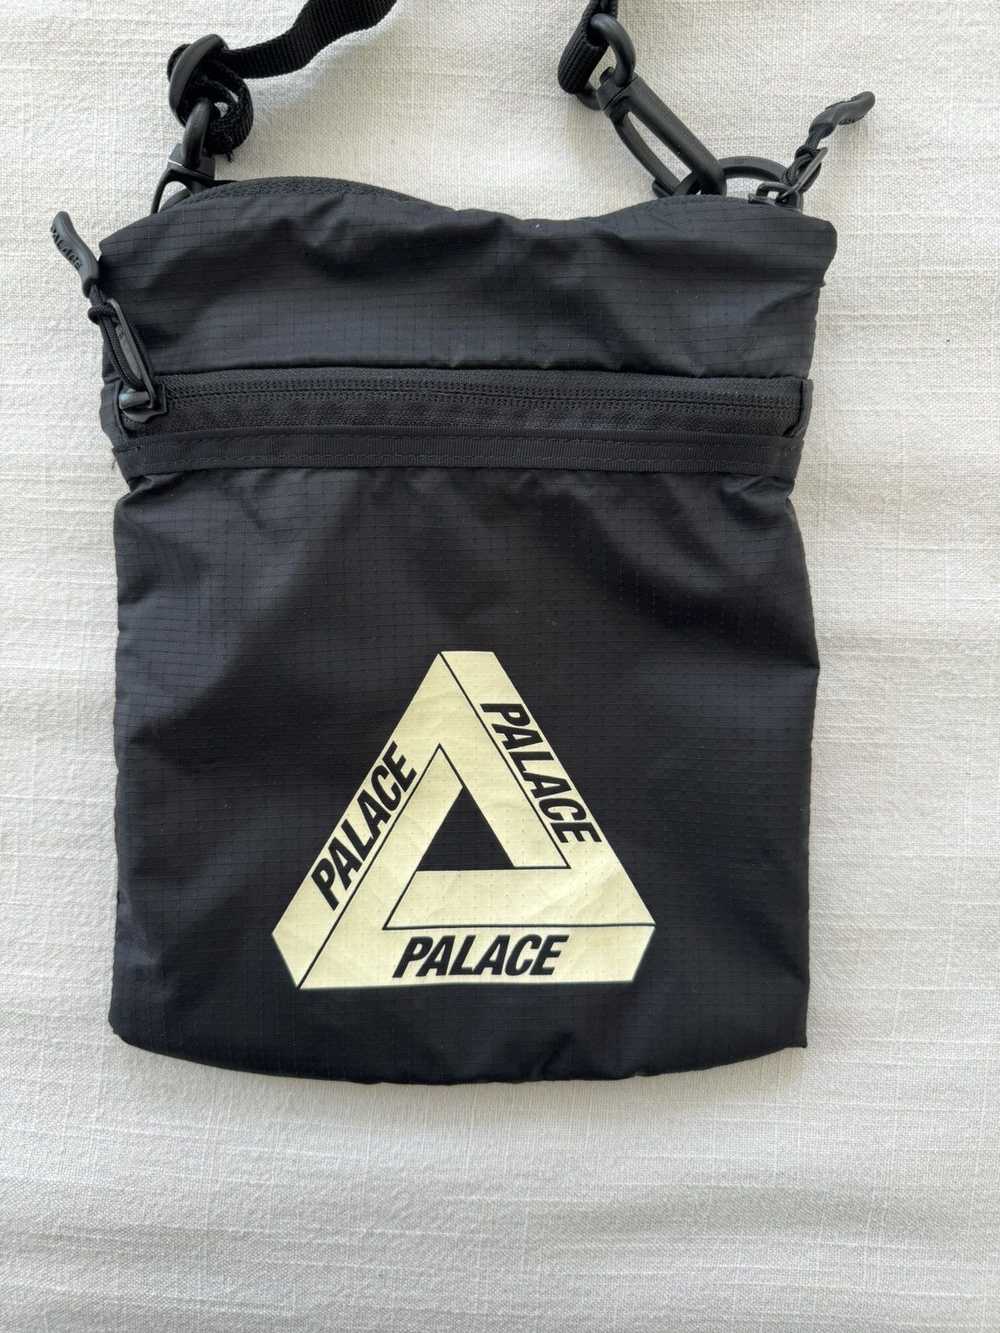 Palace Palace glow in dark shoulder bag - image 3